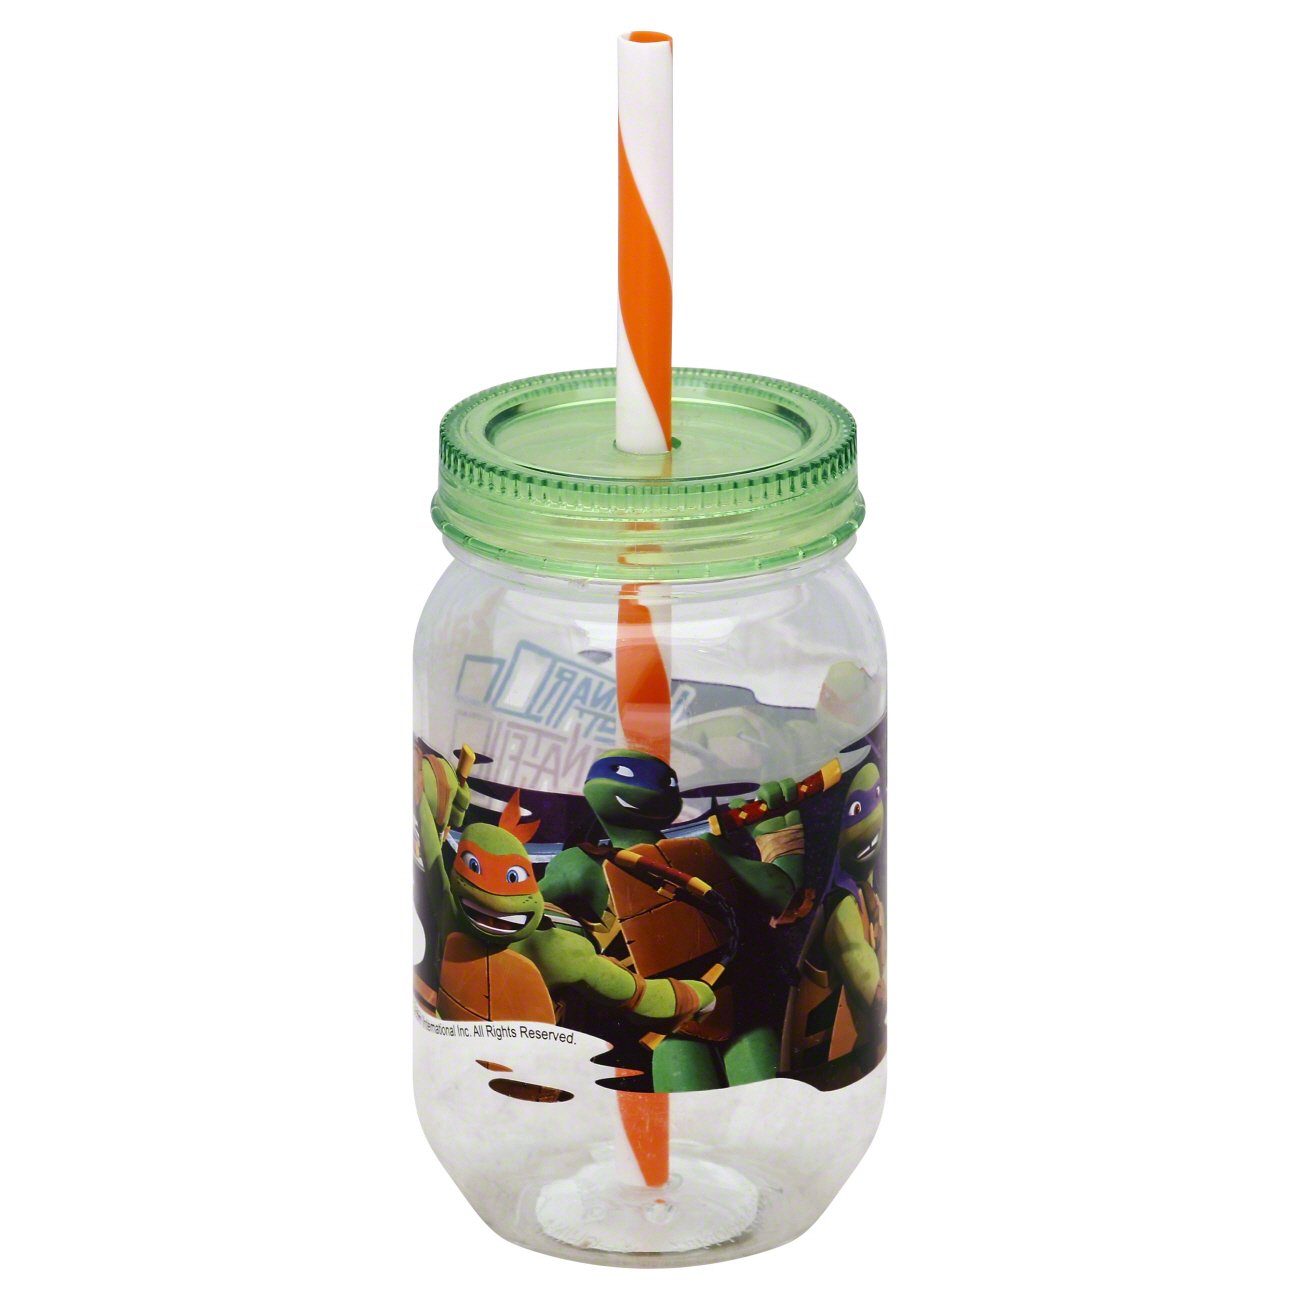 Zak Designs Teenage Mutant Ninja Turtles Kids Water Bottle For